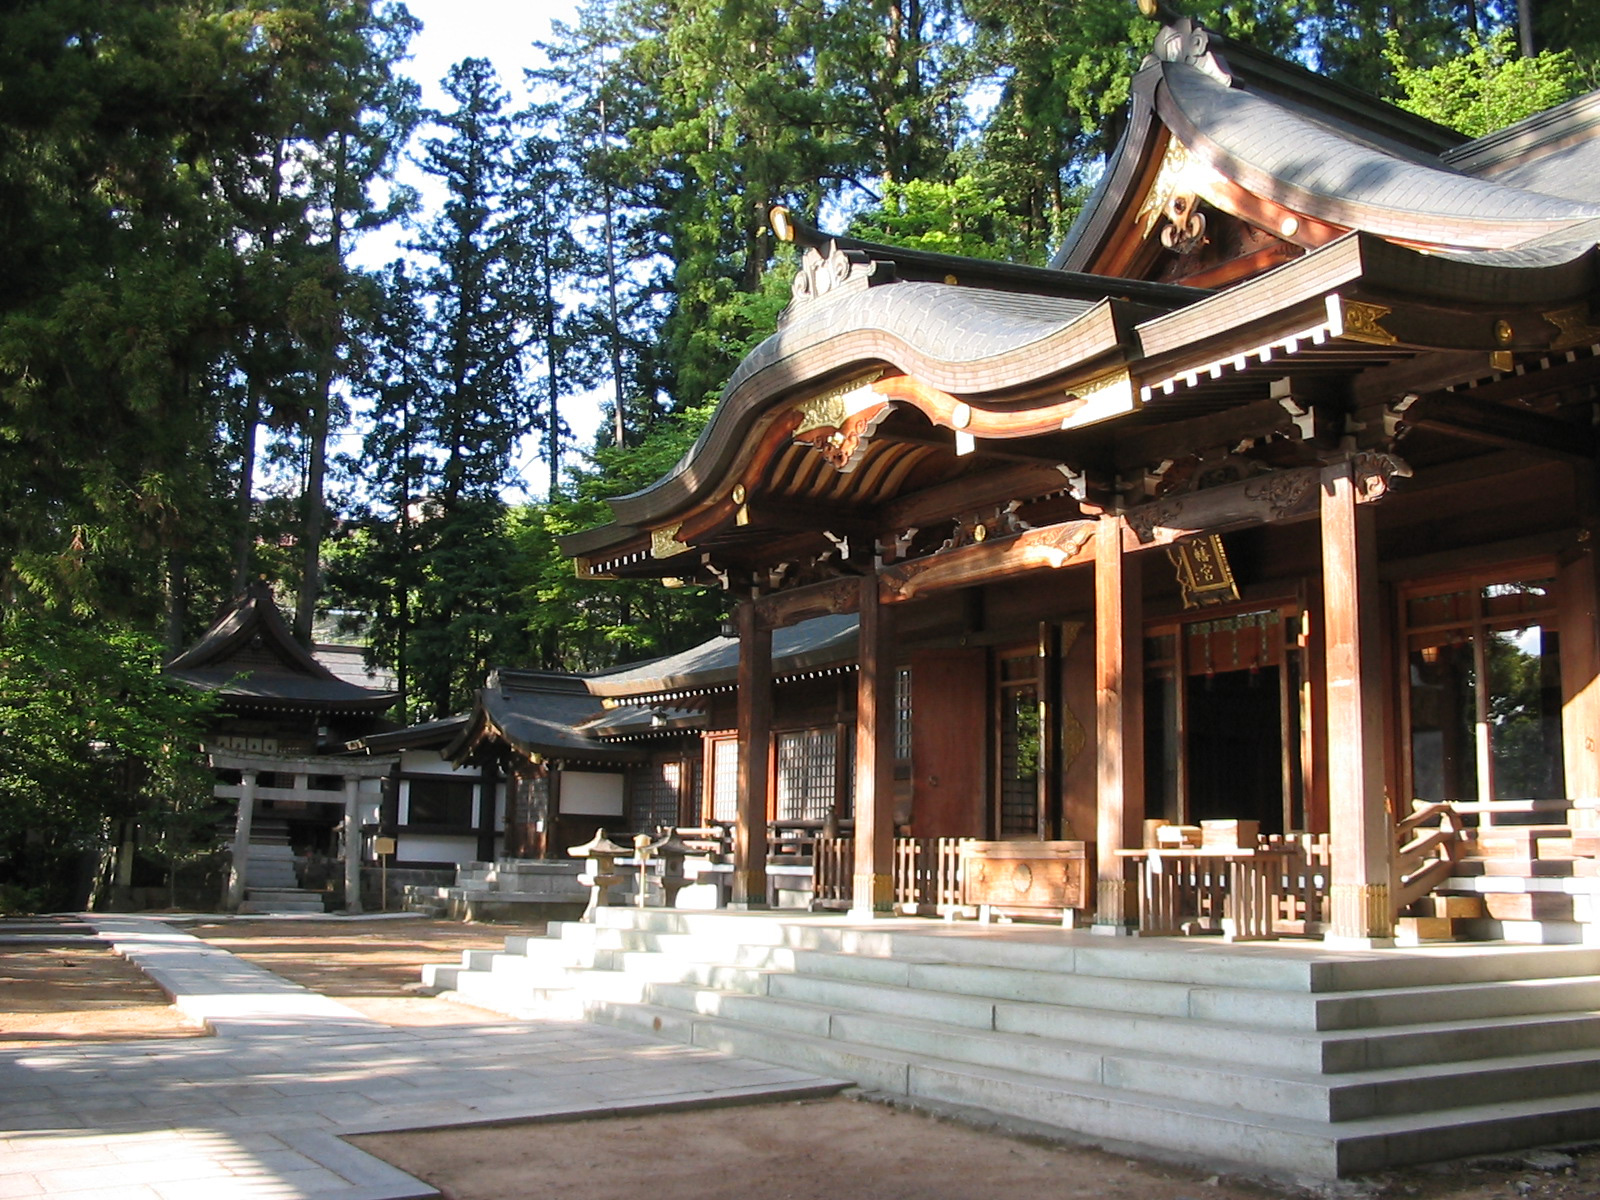 shrine pavillion surrounded by trees